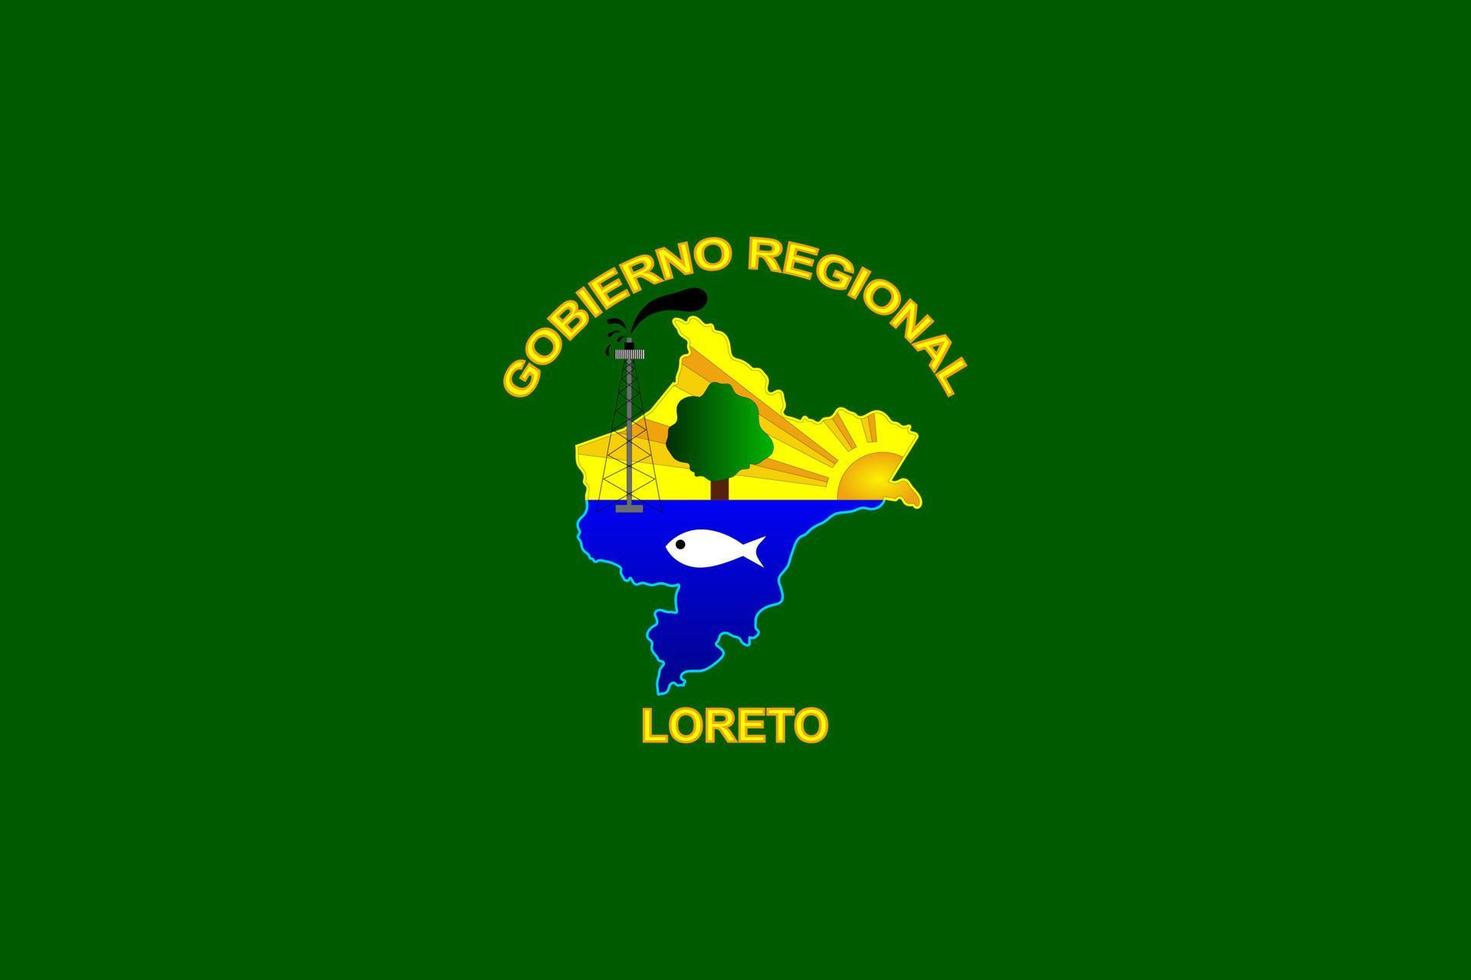 Department of Loreto Flag. Peru. Vector Illustration.